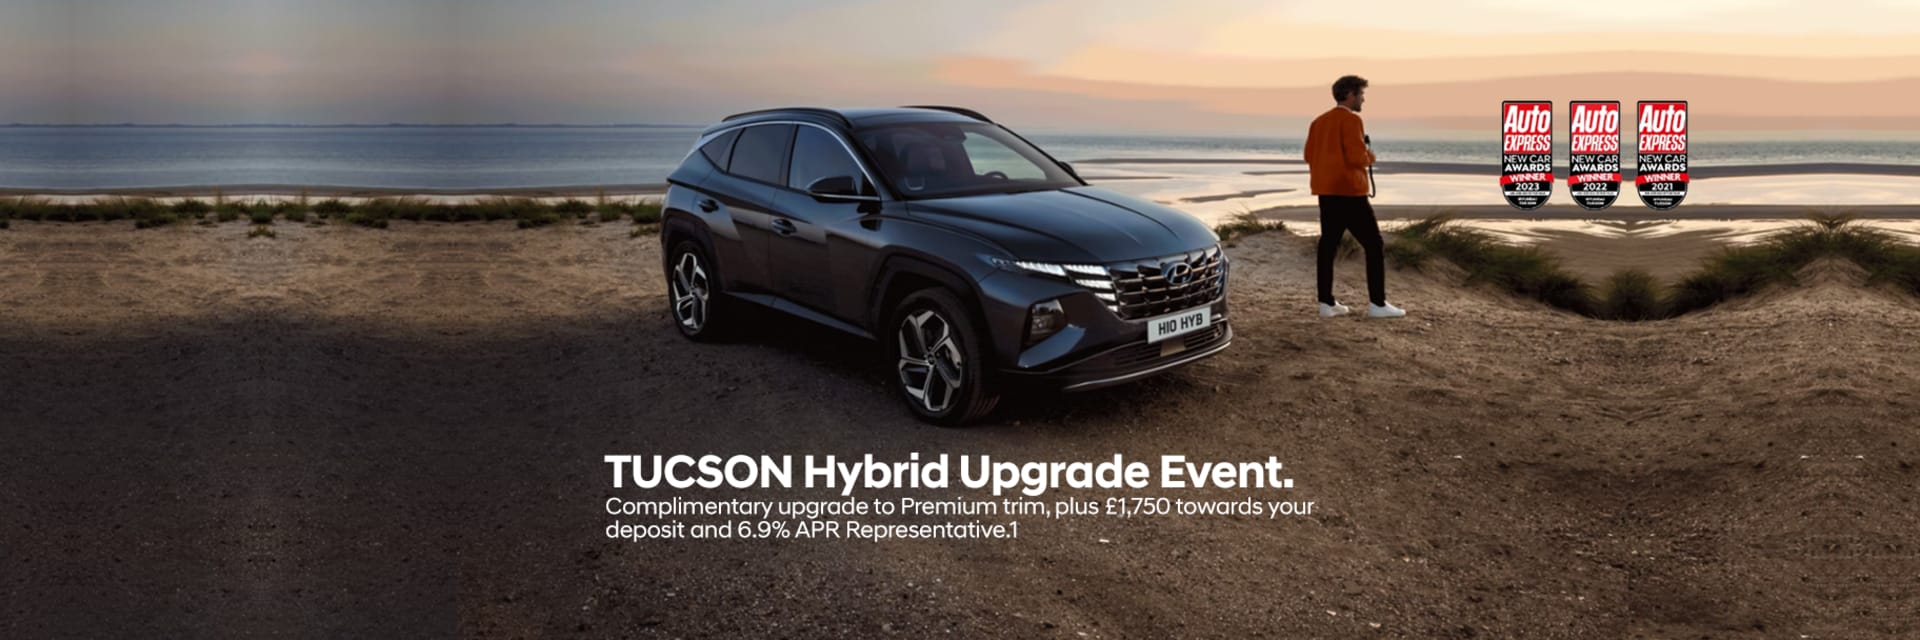 TUCSON Hybrid Upgrade Event